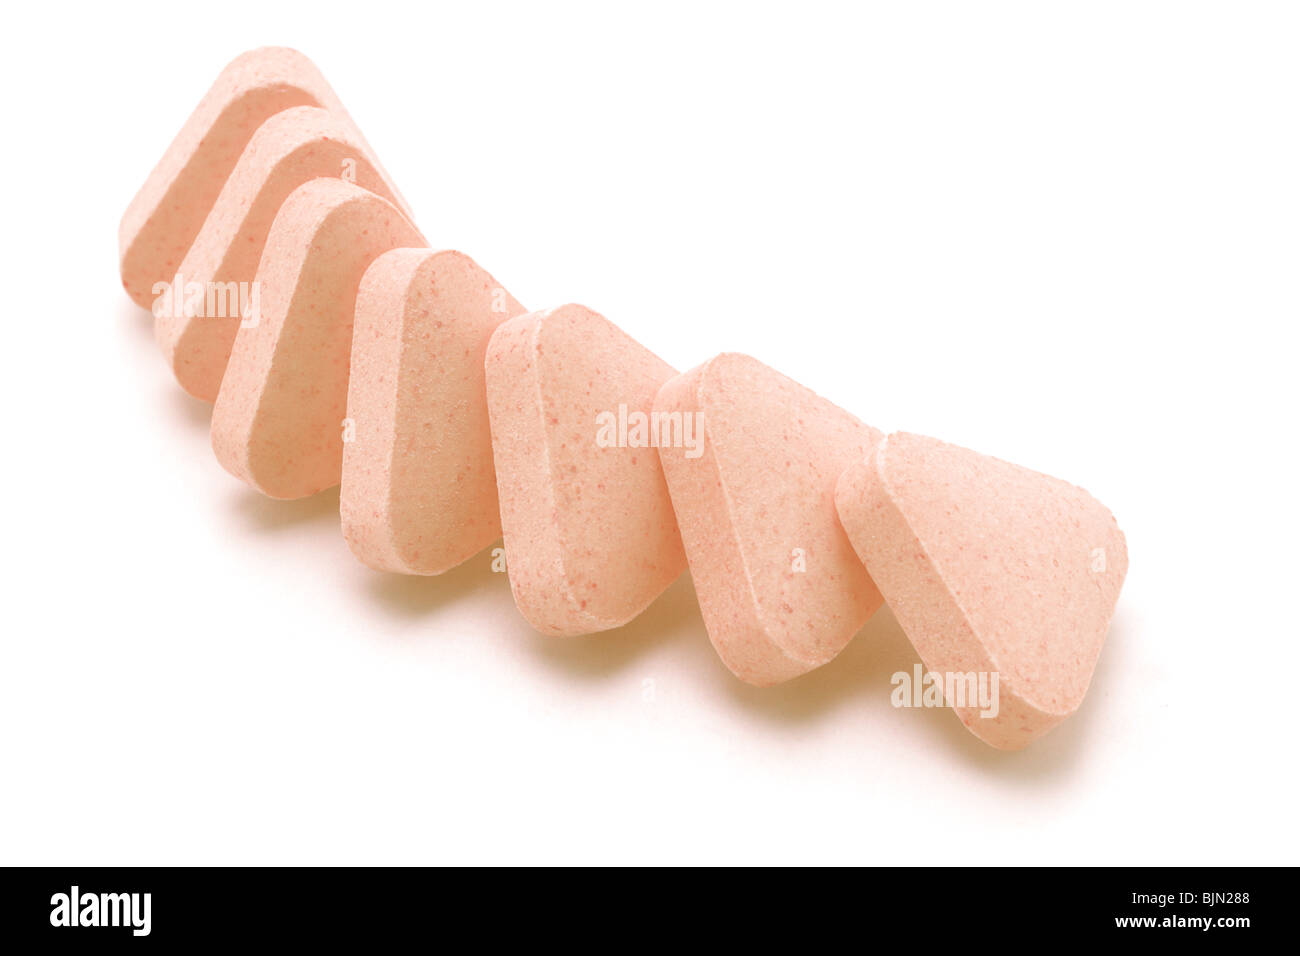 triangular shape vitamin tablets arranged on white background Stock Photo